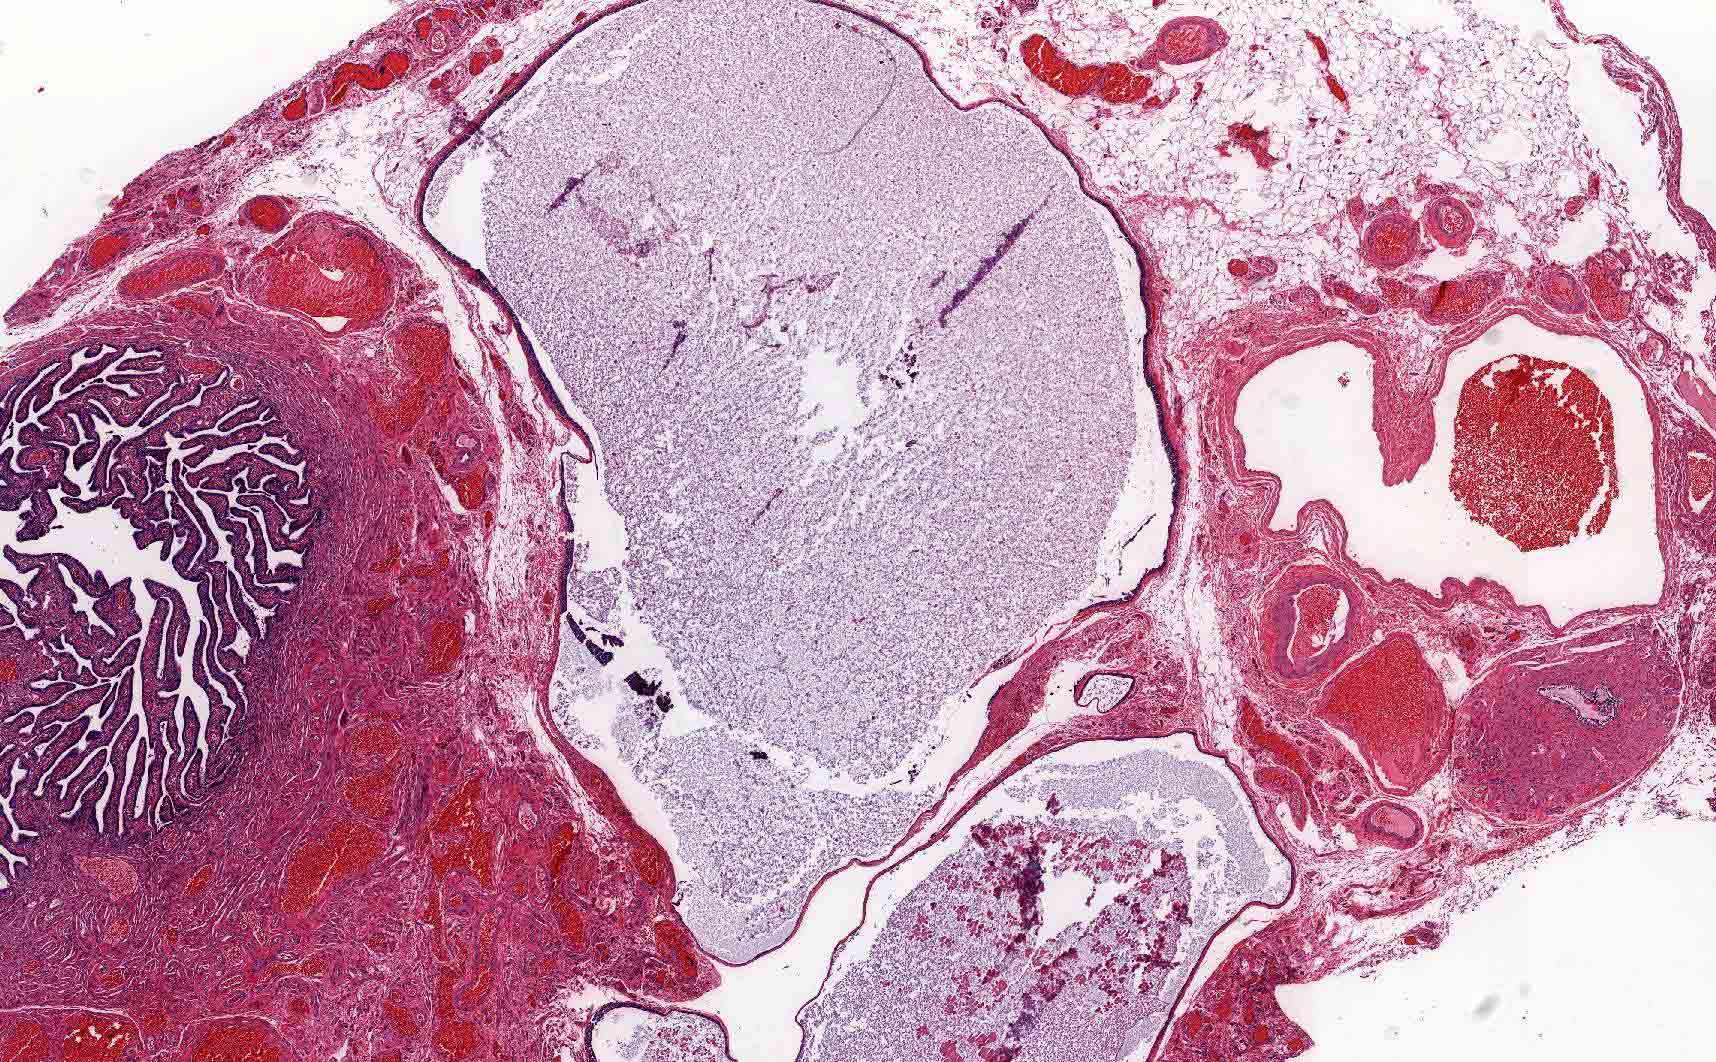 Paratubal cysts adjacent to fallopian tube